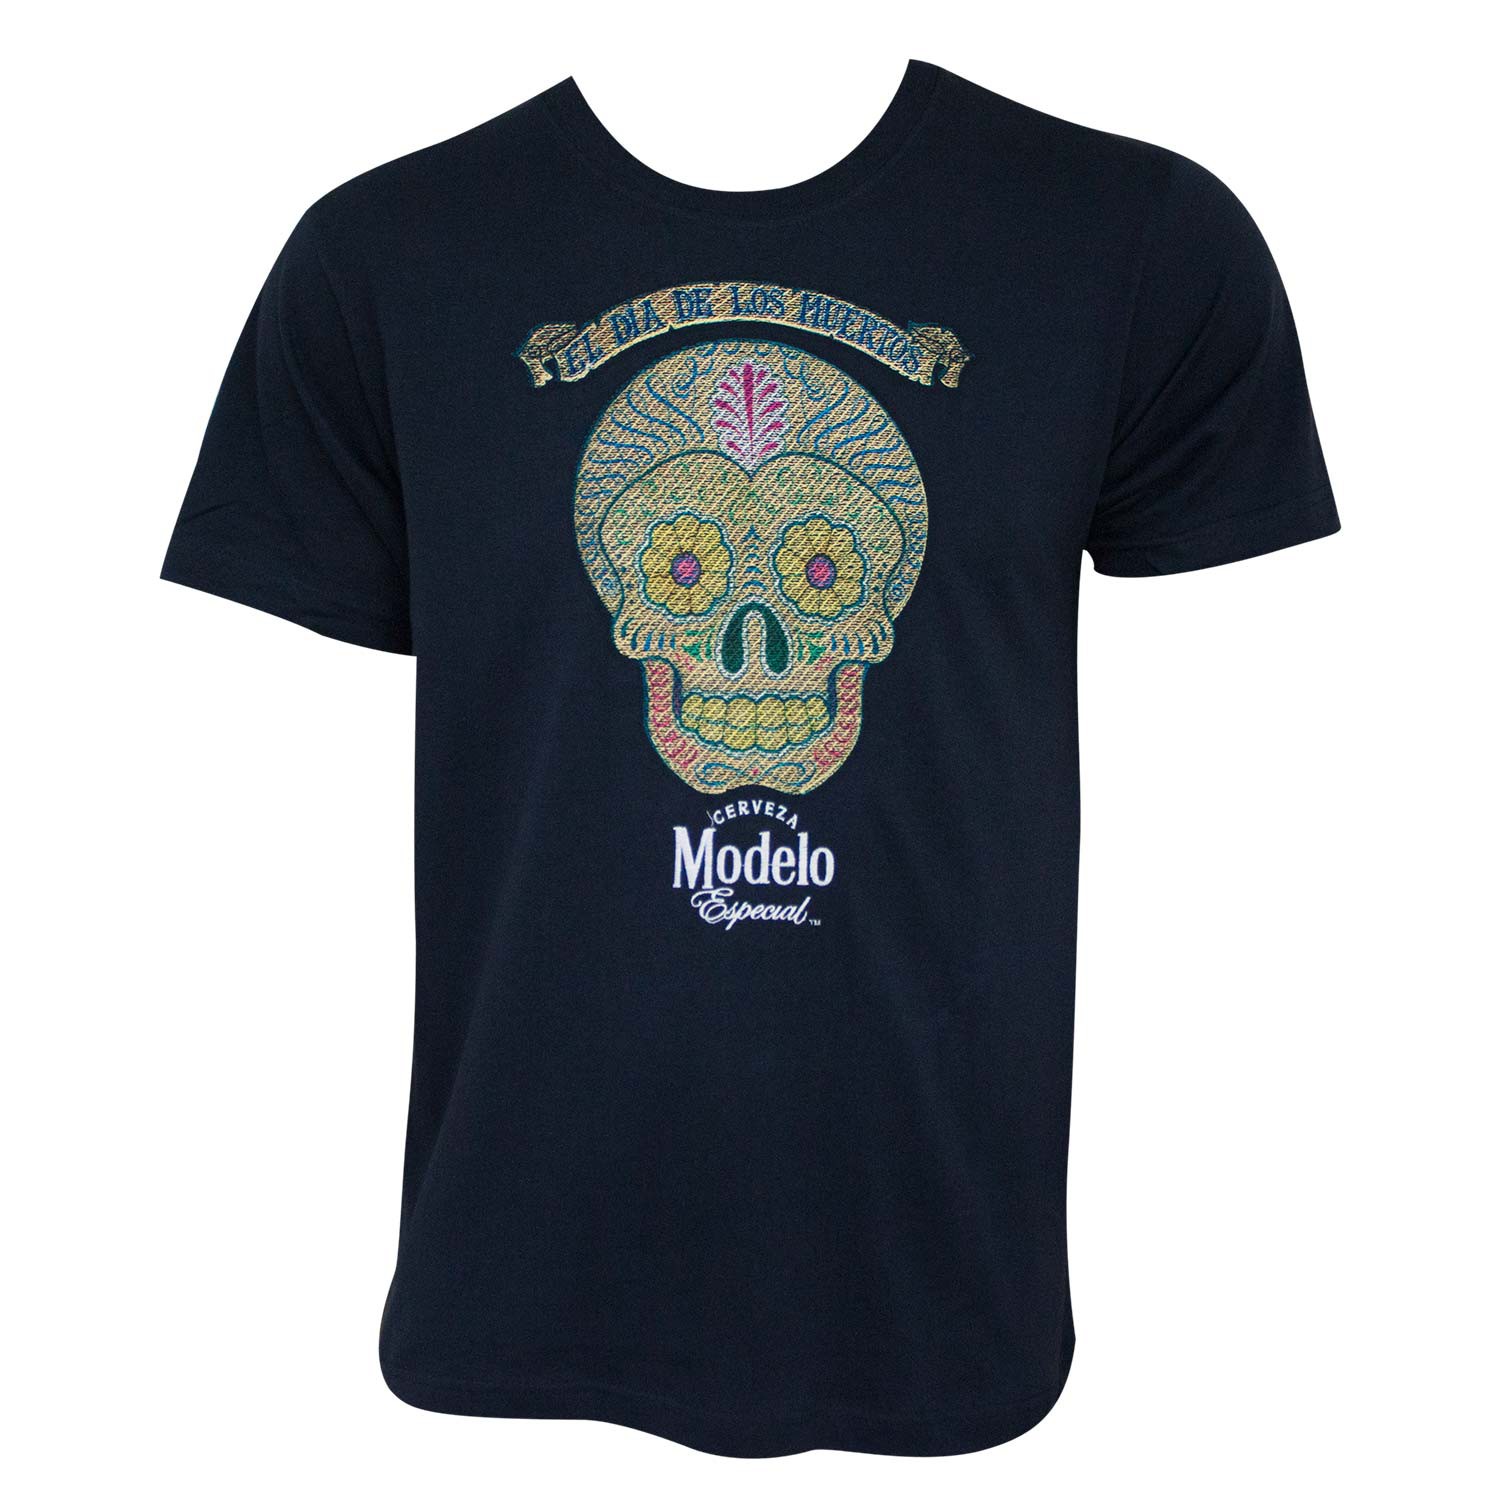 Modelo Especial Embroidered Skull Logo Tee Shirt